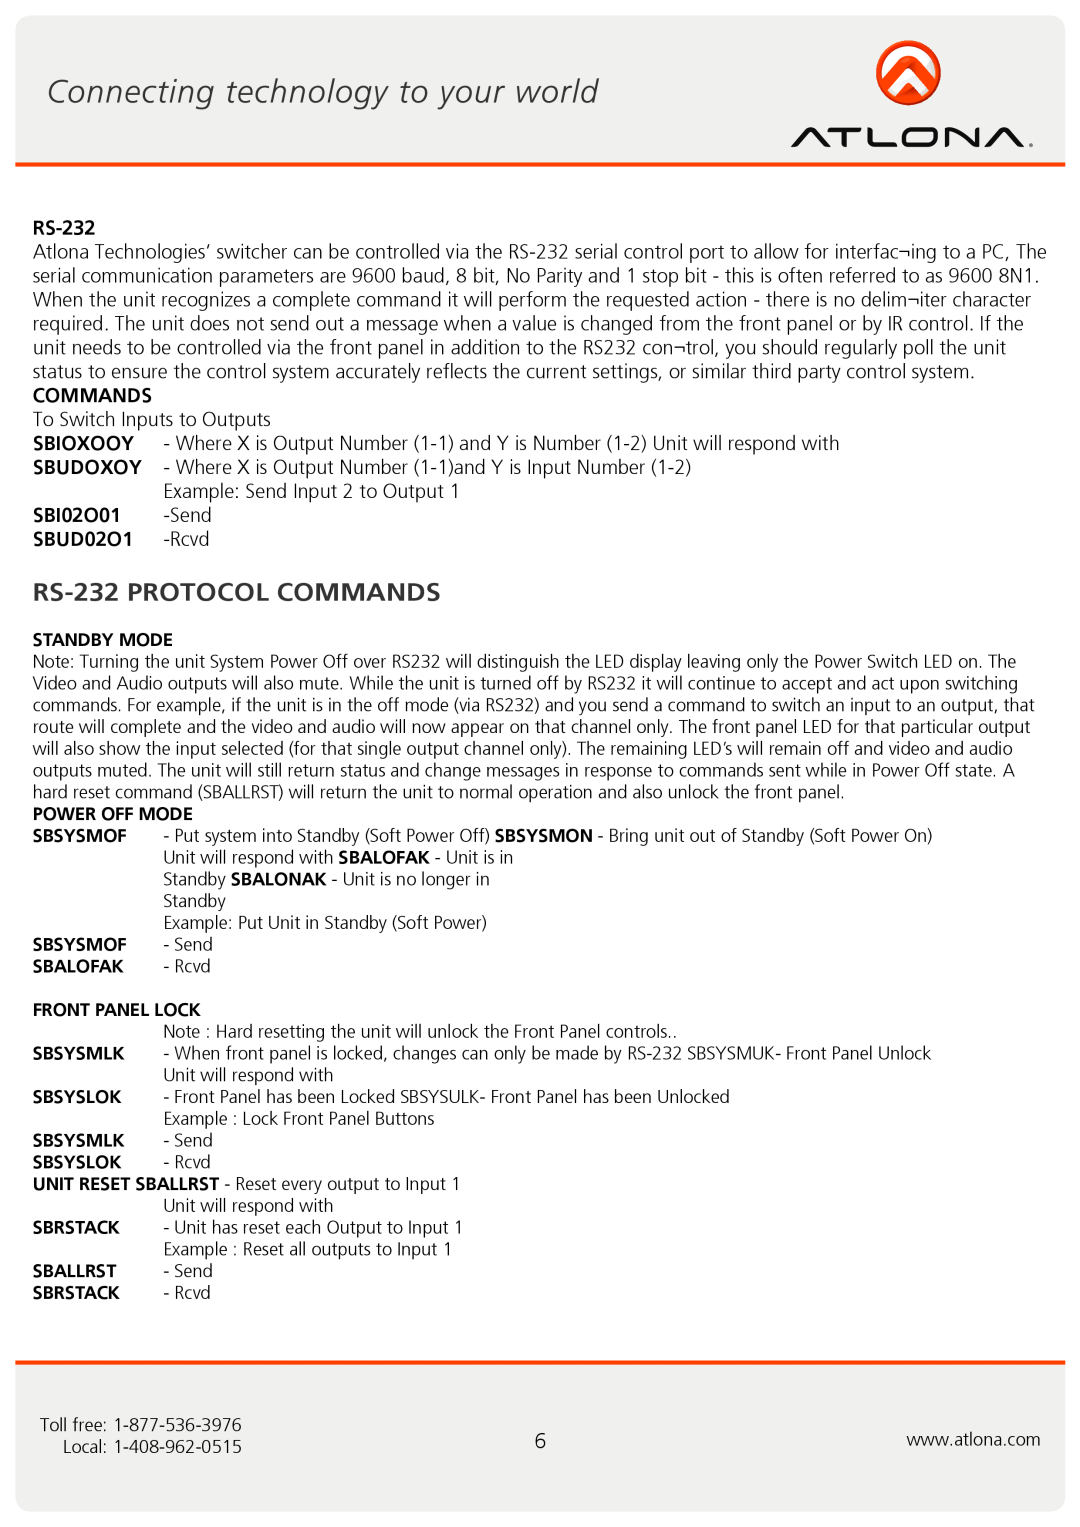 Atlona AT-HD-V216 user manual RS-232PROTOCOL COMMANDS, Commands, SBUD02O1 -Rcvd 